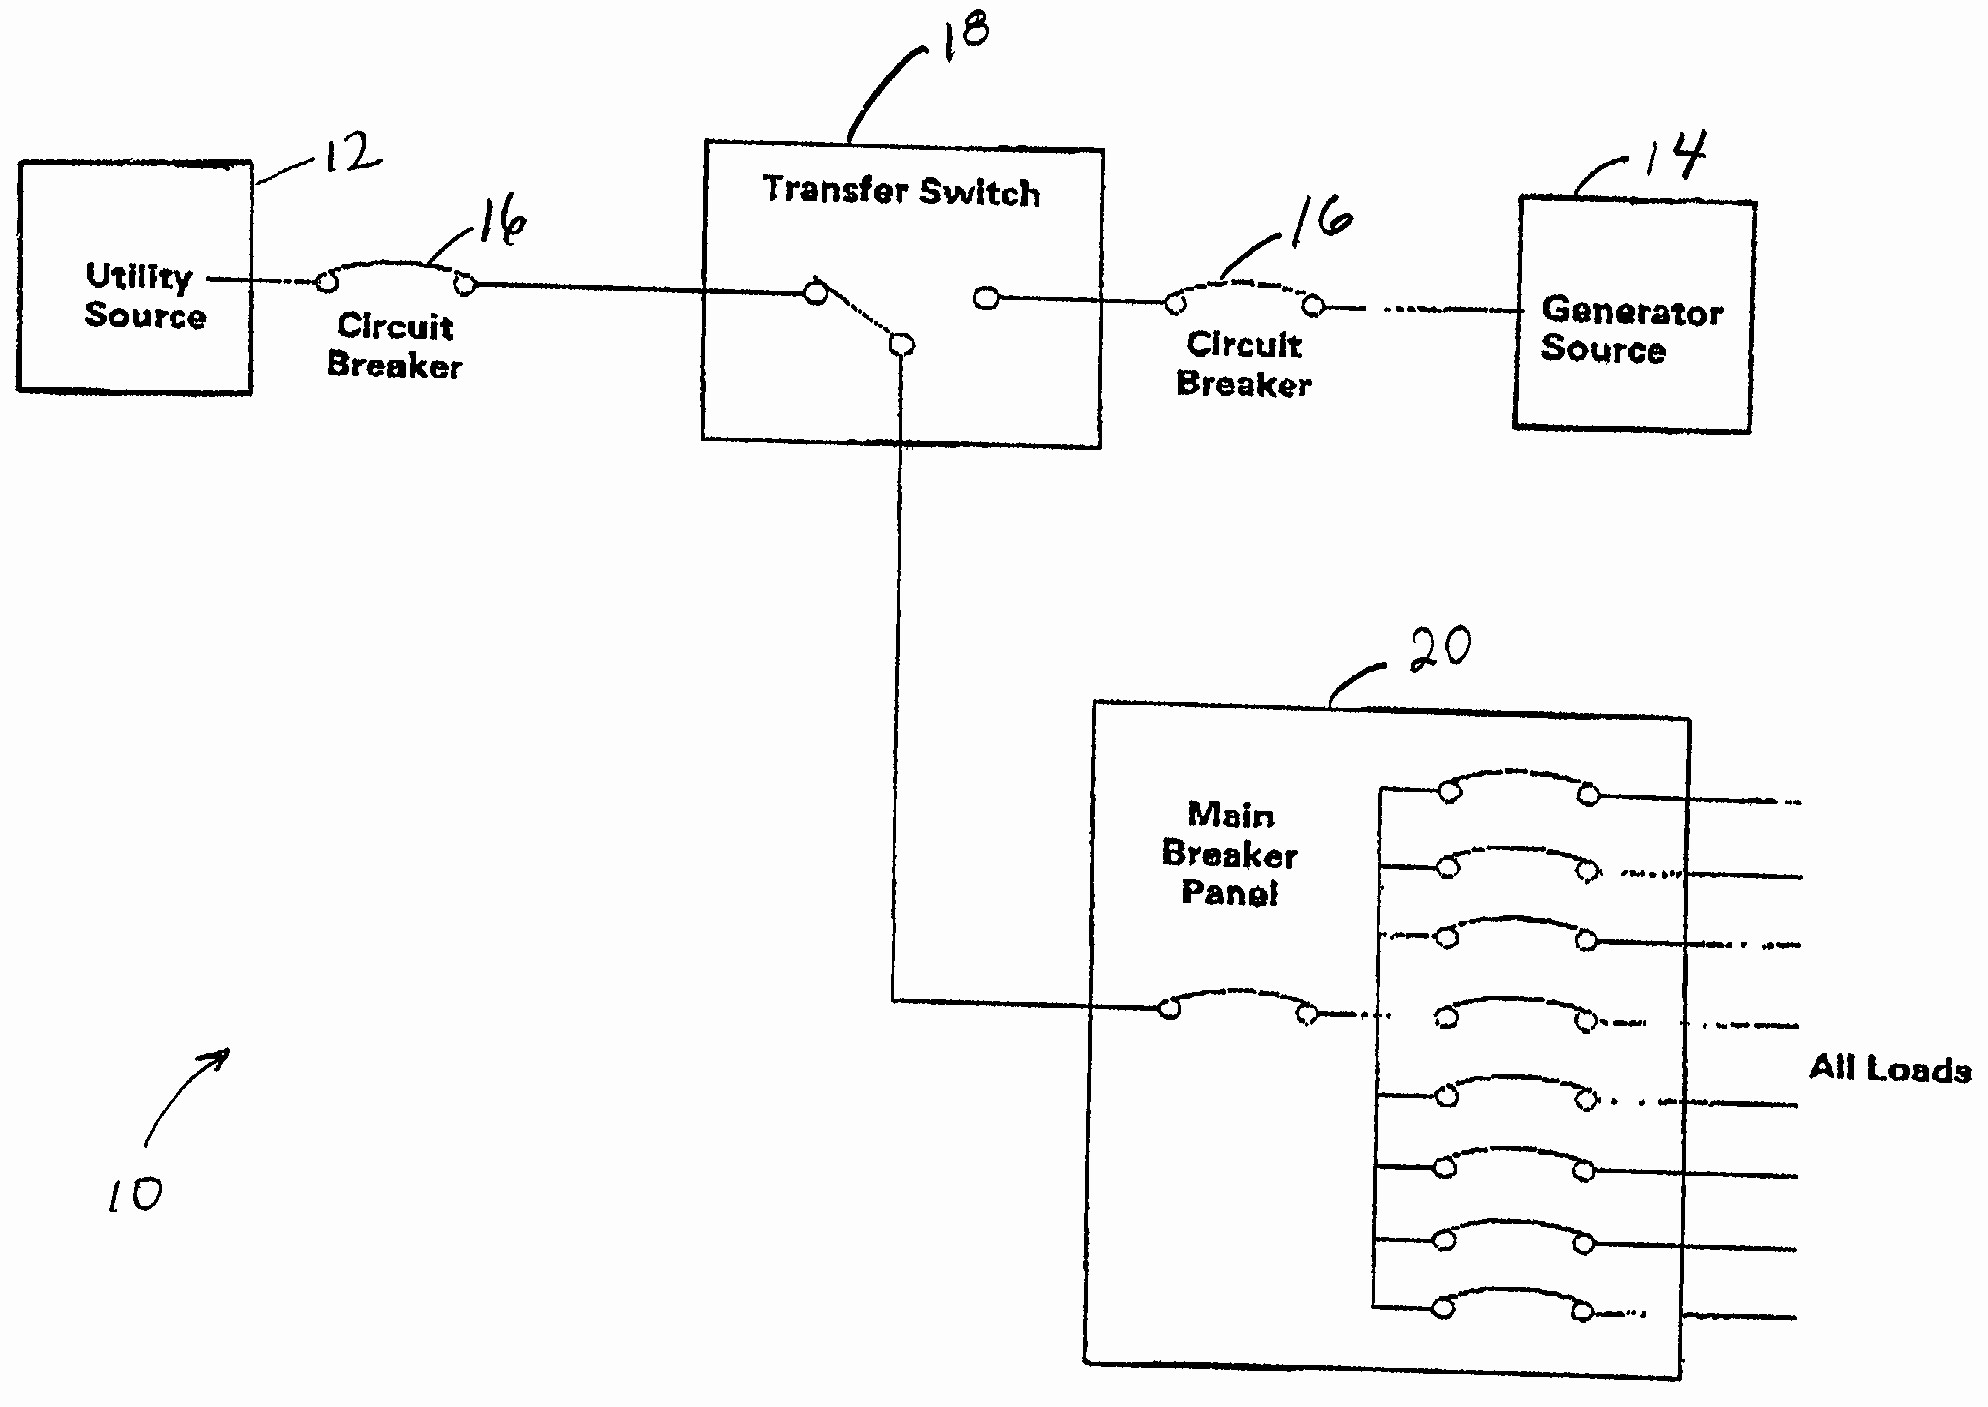 Generator Automatic Transfer Switch Wiring Diagram for Manual Transfer Switch Wiring Diagramloor Plan Ideasor Building